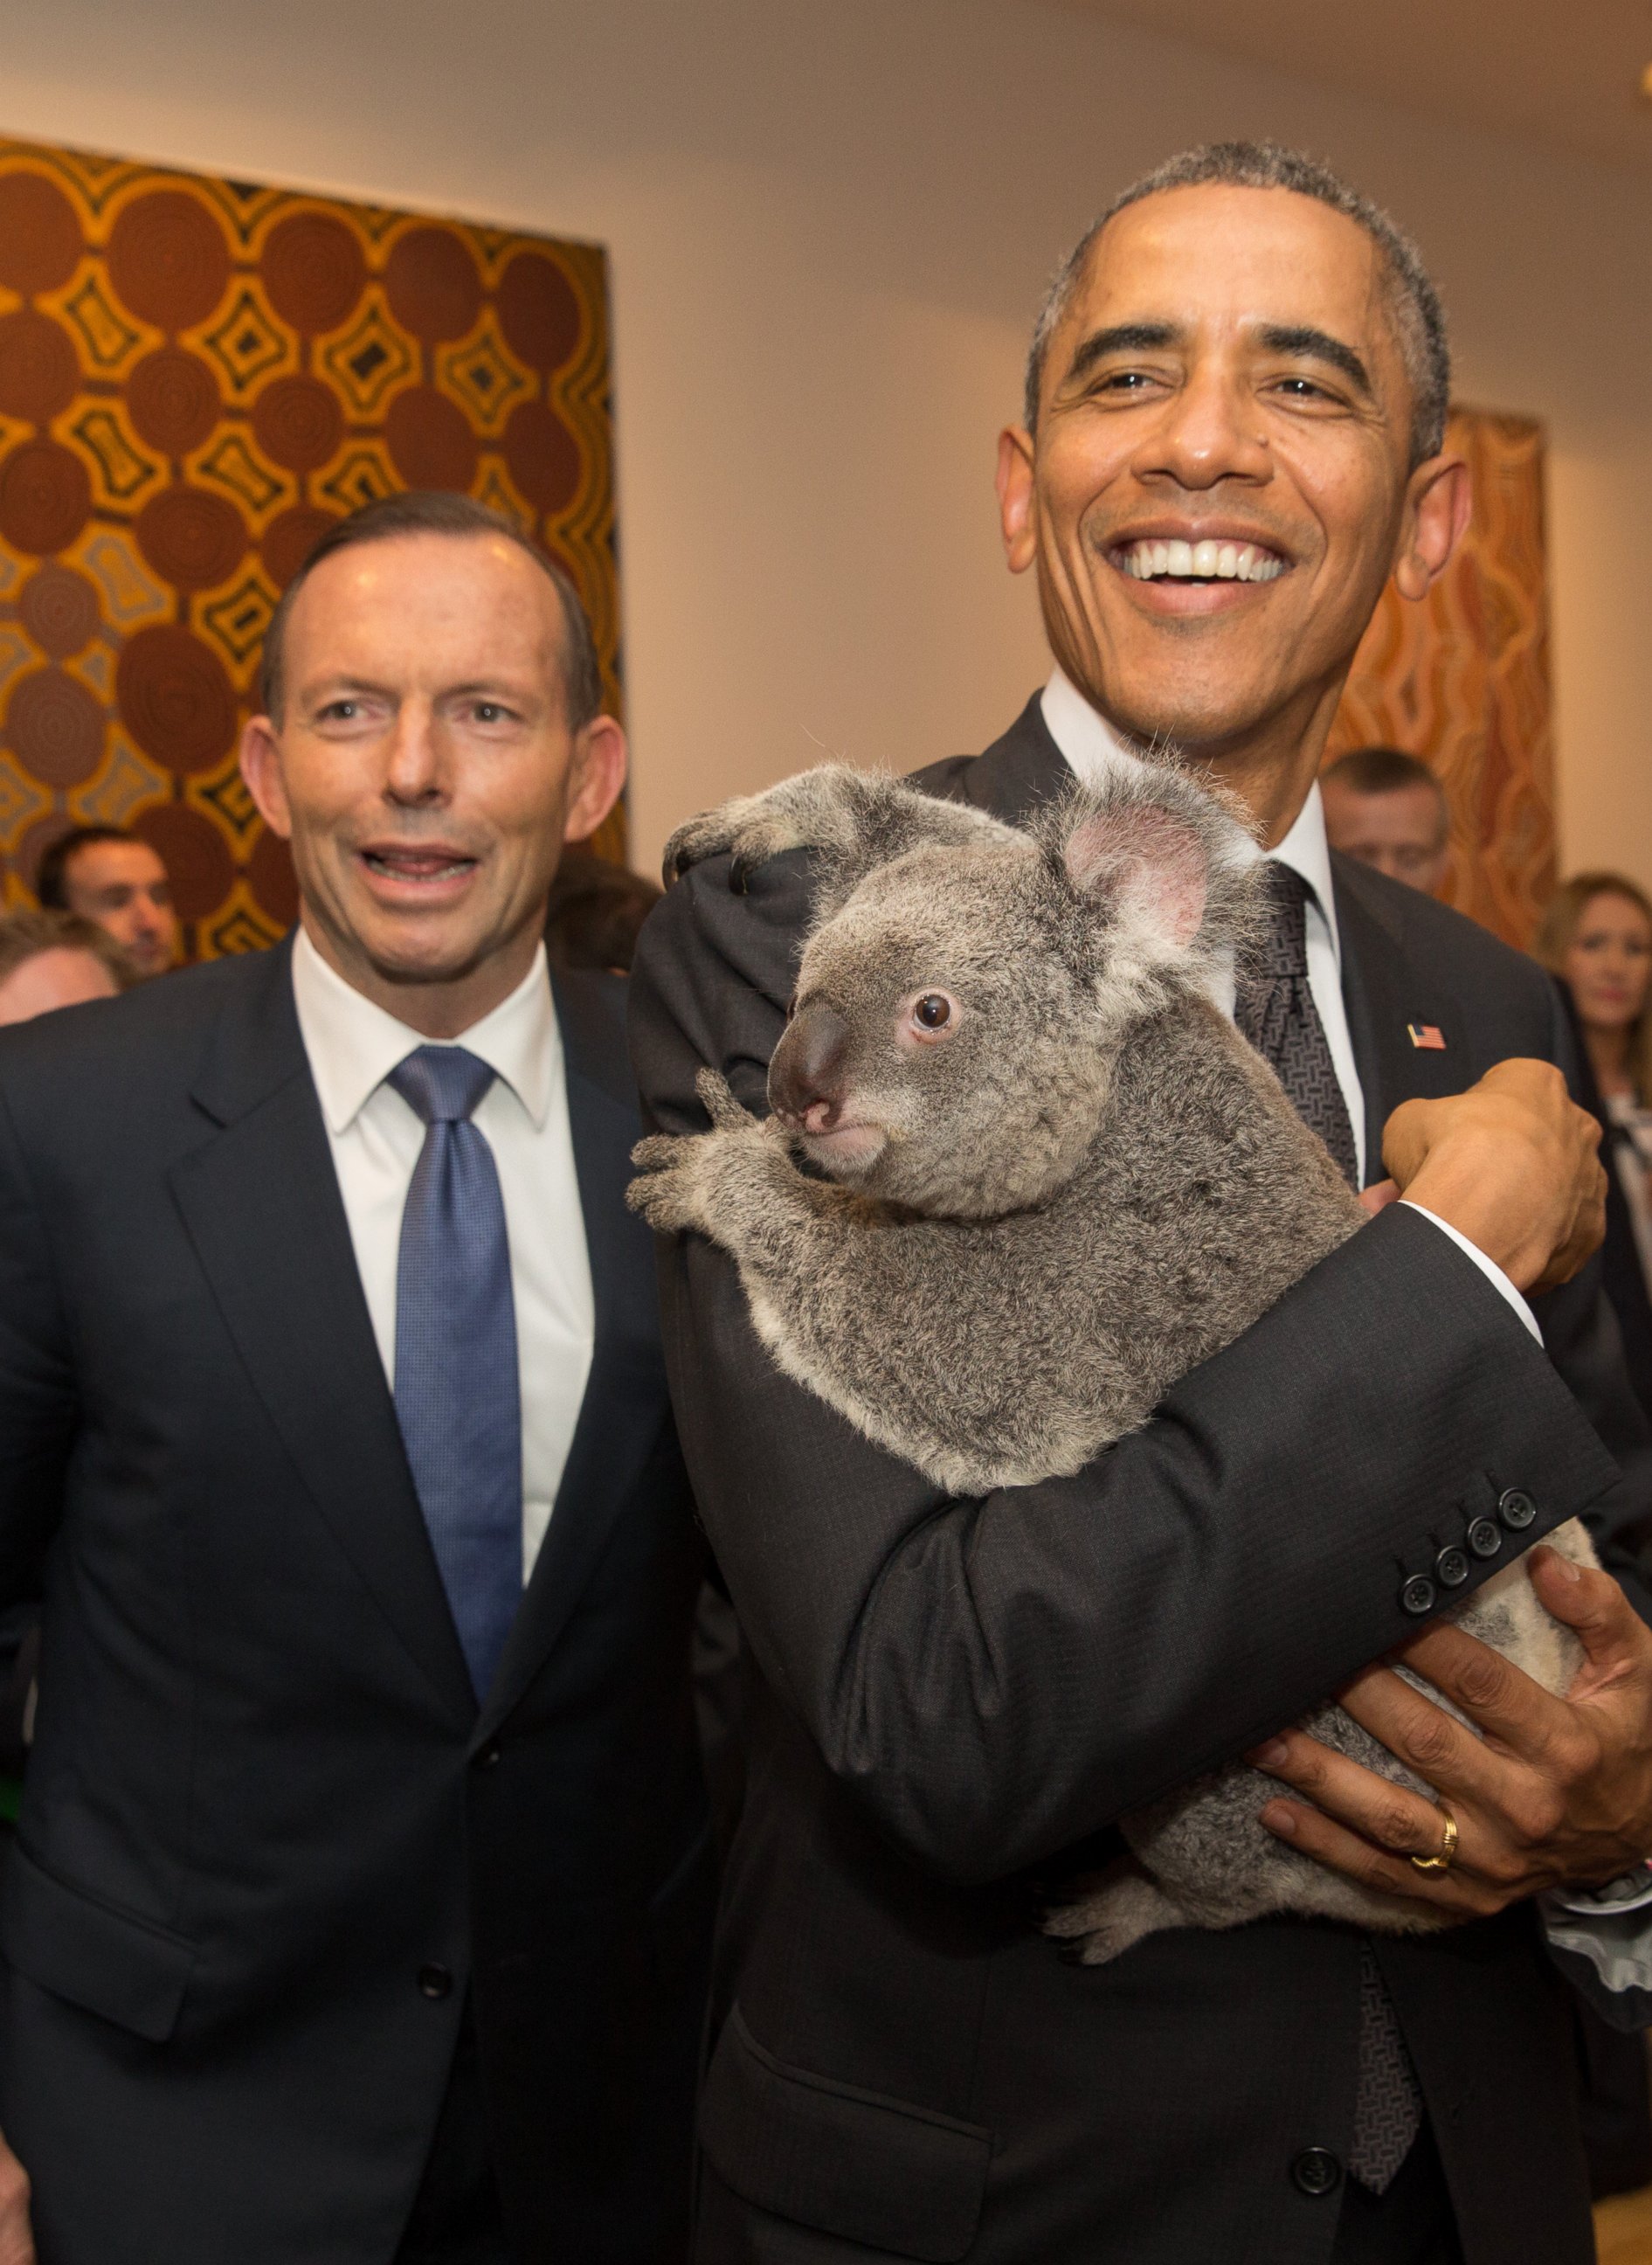 PHOTO: President Obama, pictured here with Australian Prime Minister Tony Abbott holds a koala